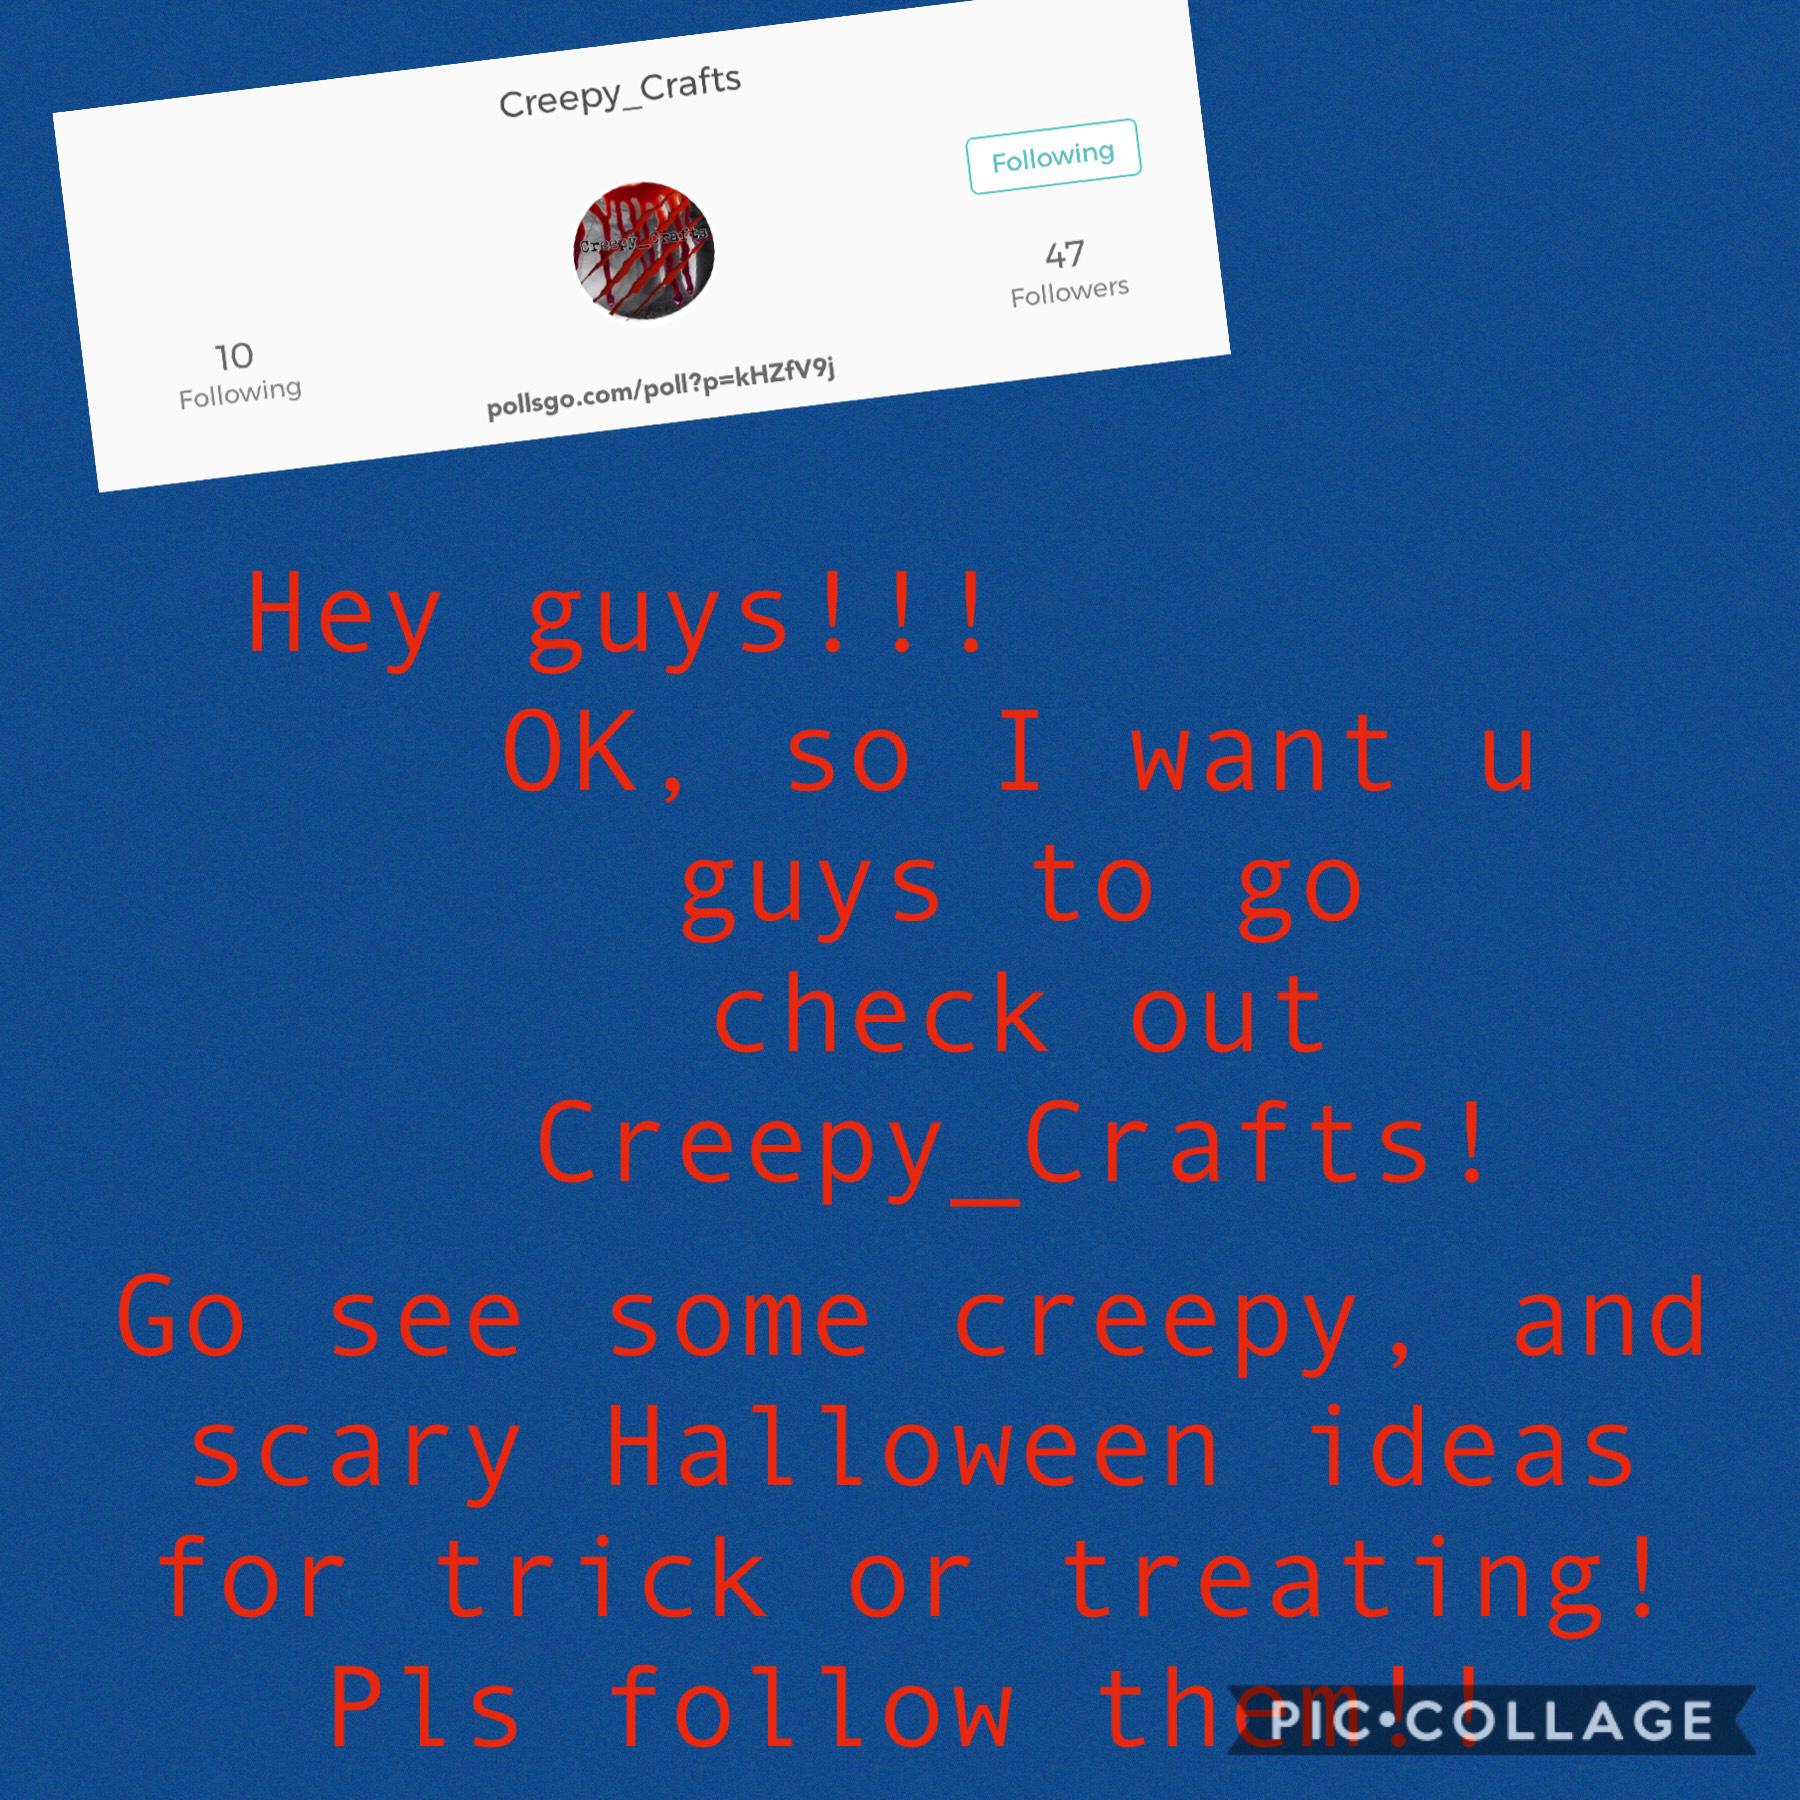 Follow Creepy_Crafts!